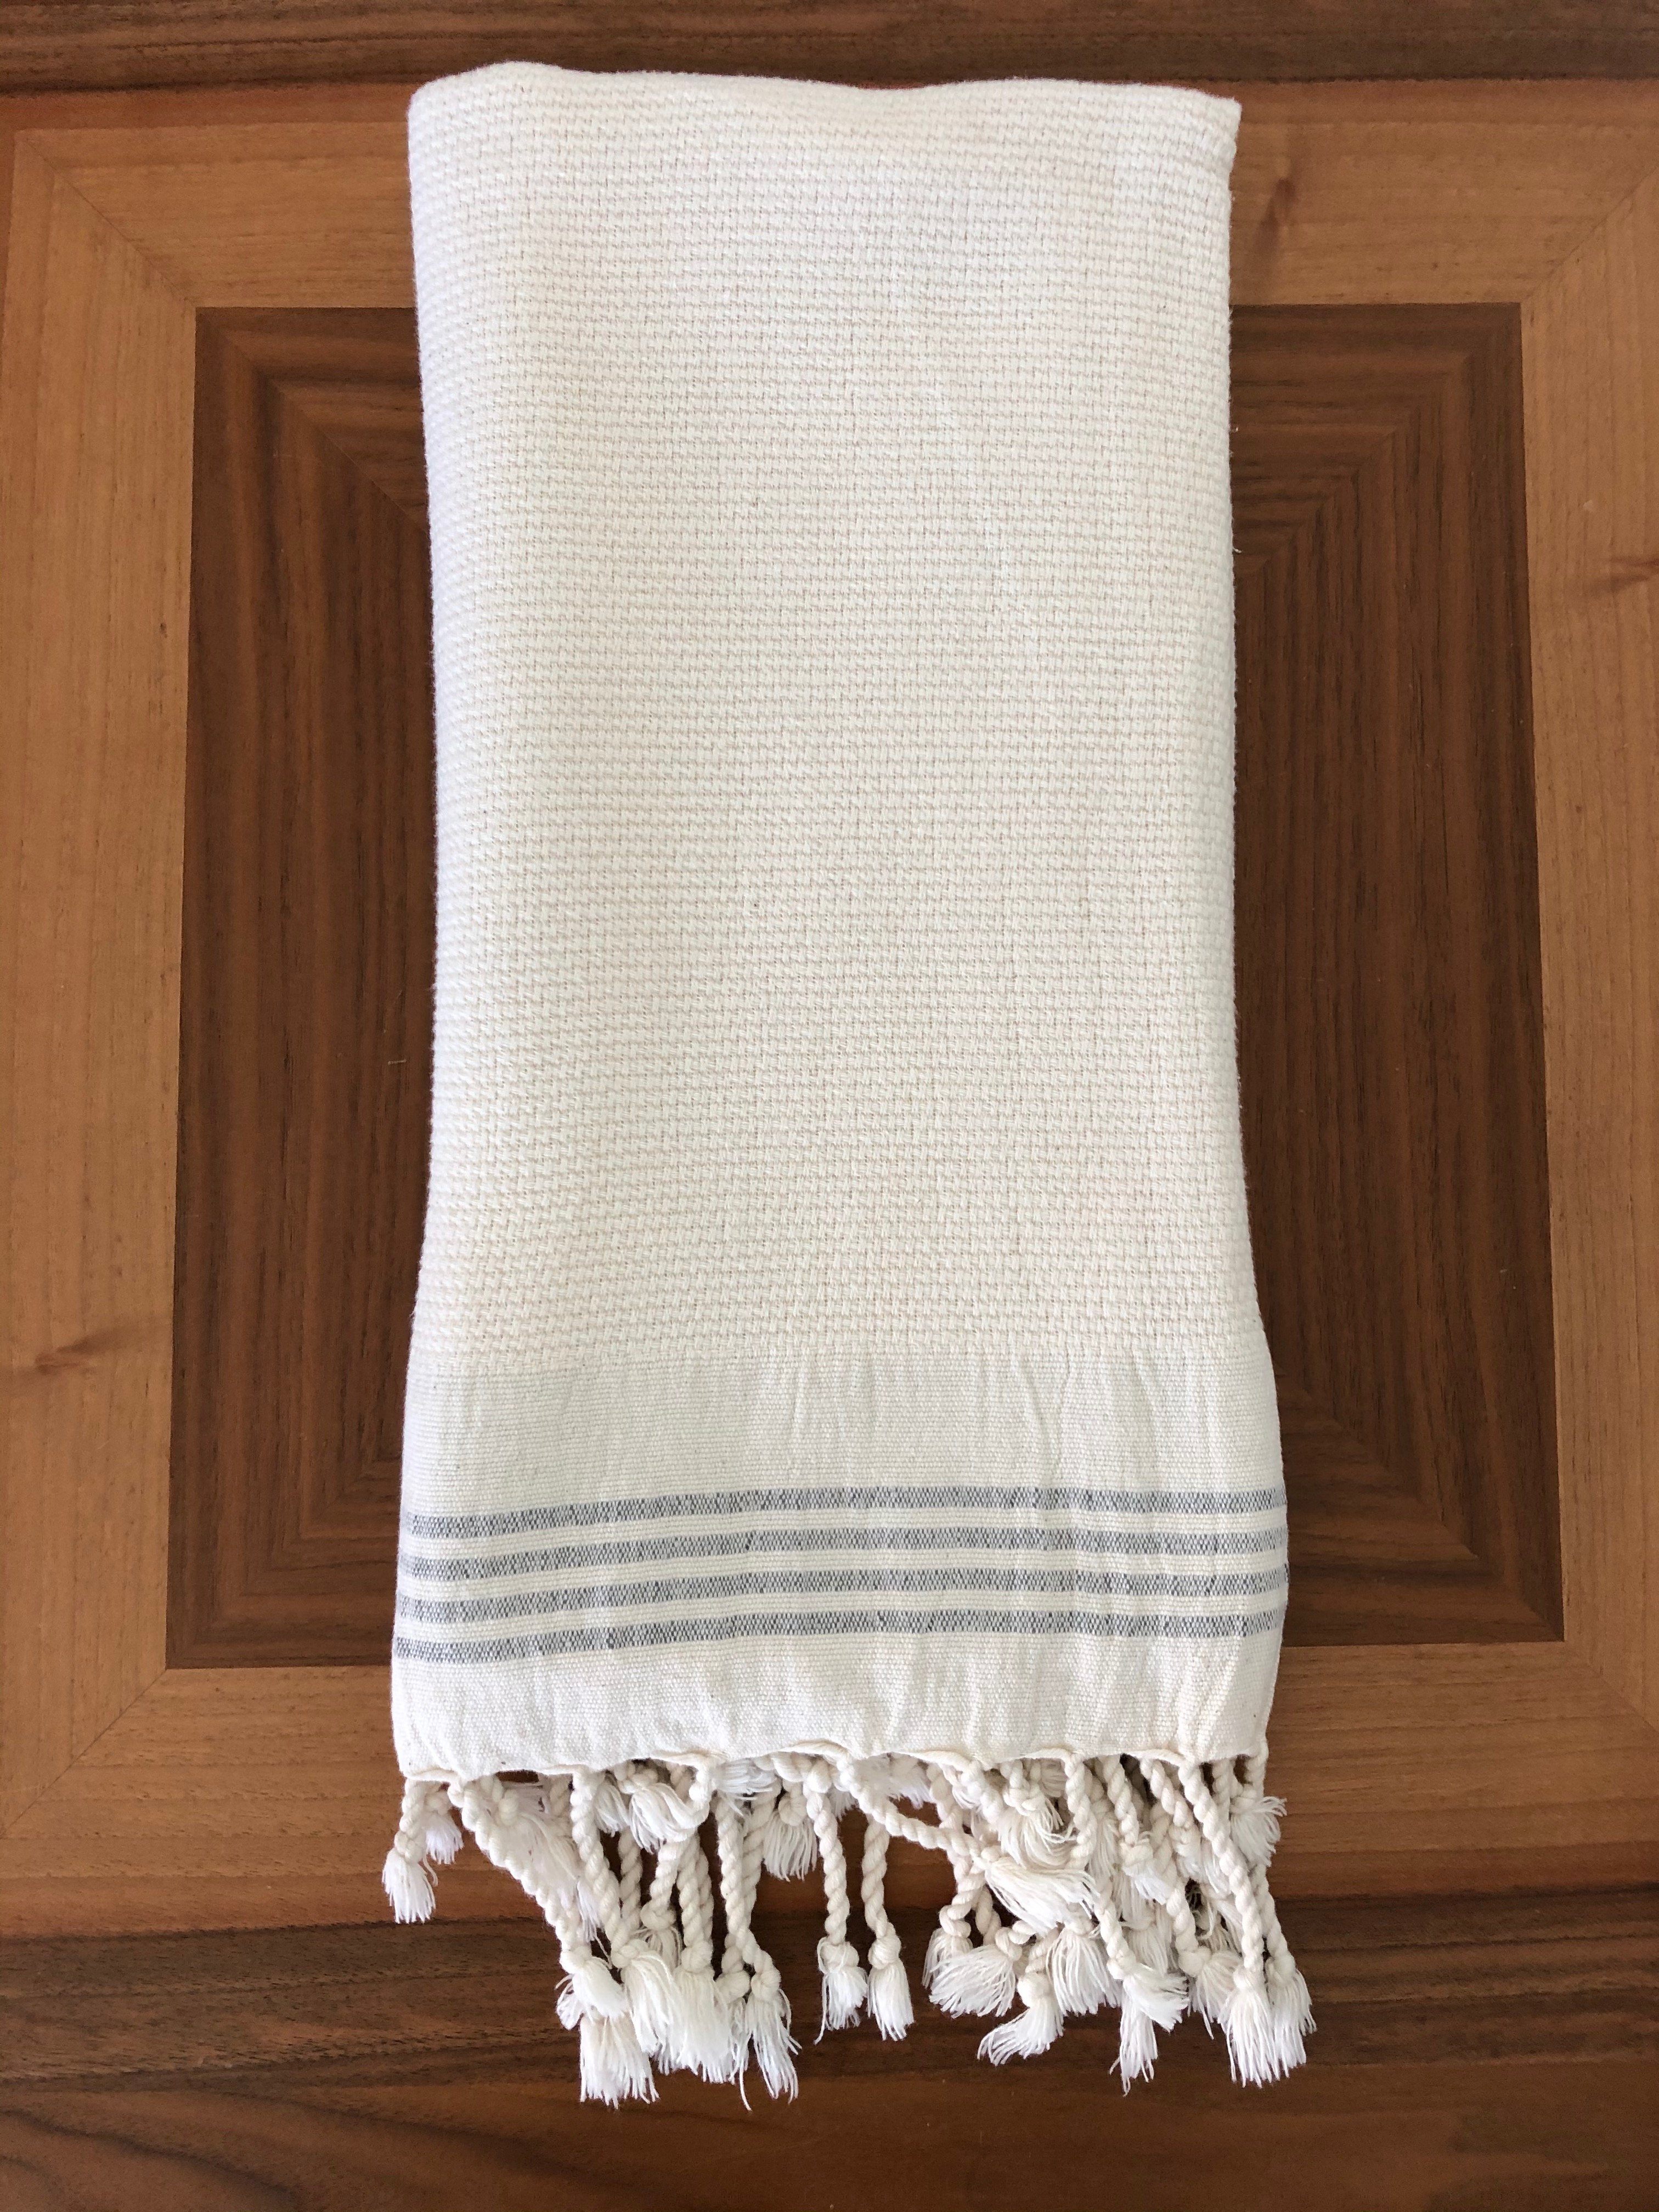 Lush Loom Turkish Hand Towel - Olive and Linen